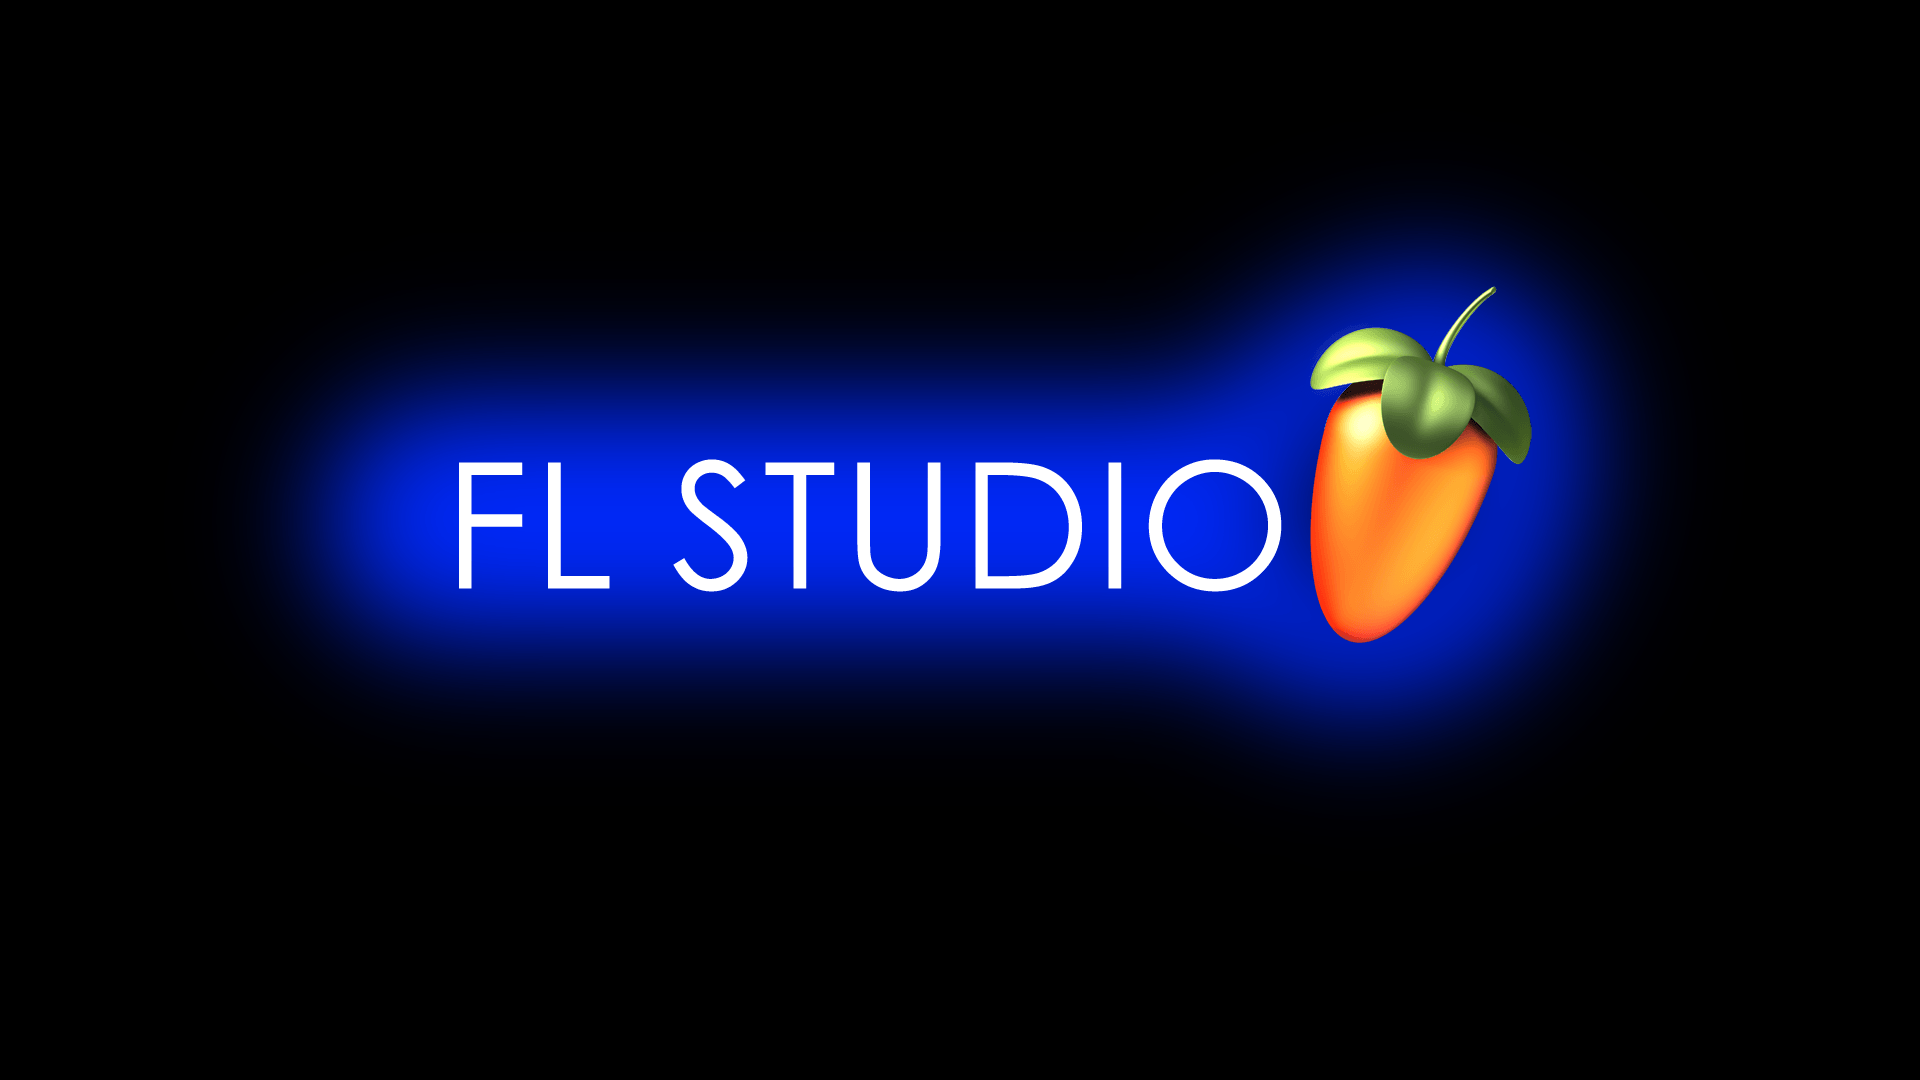 fl studio logo hd wallpaper